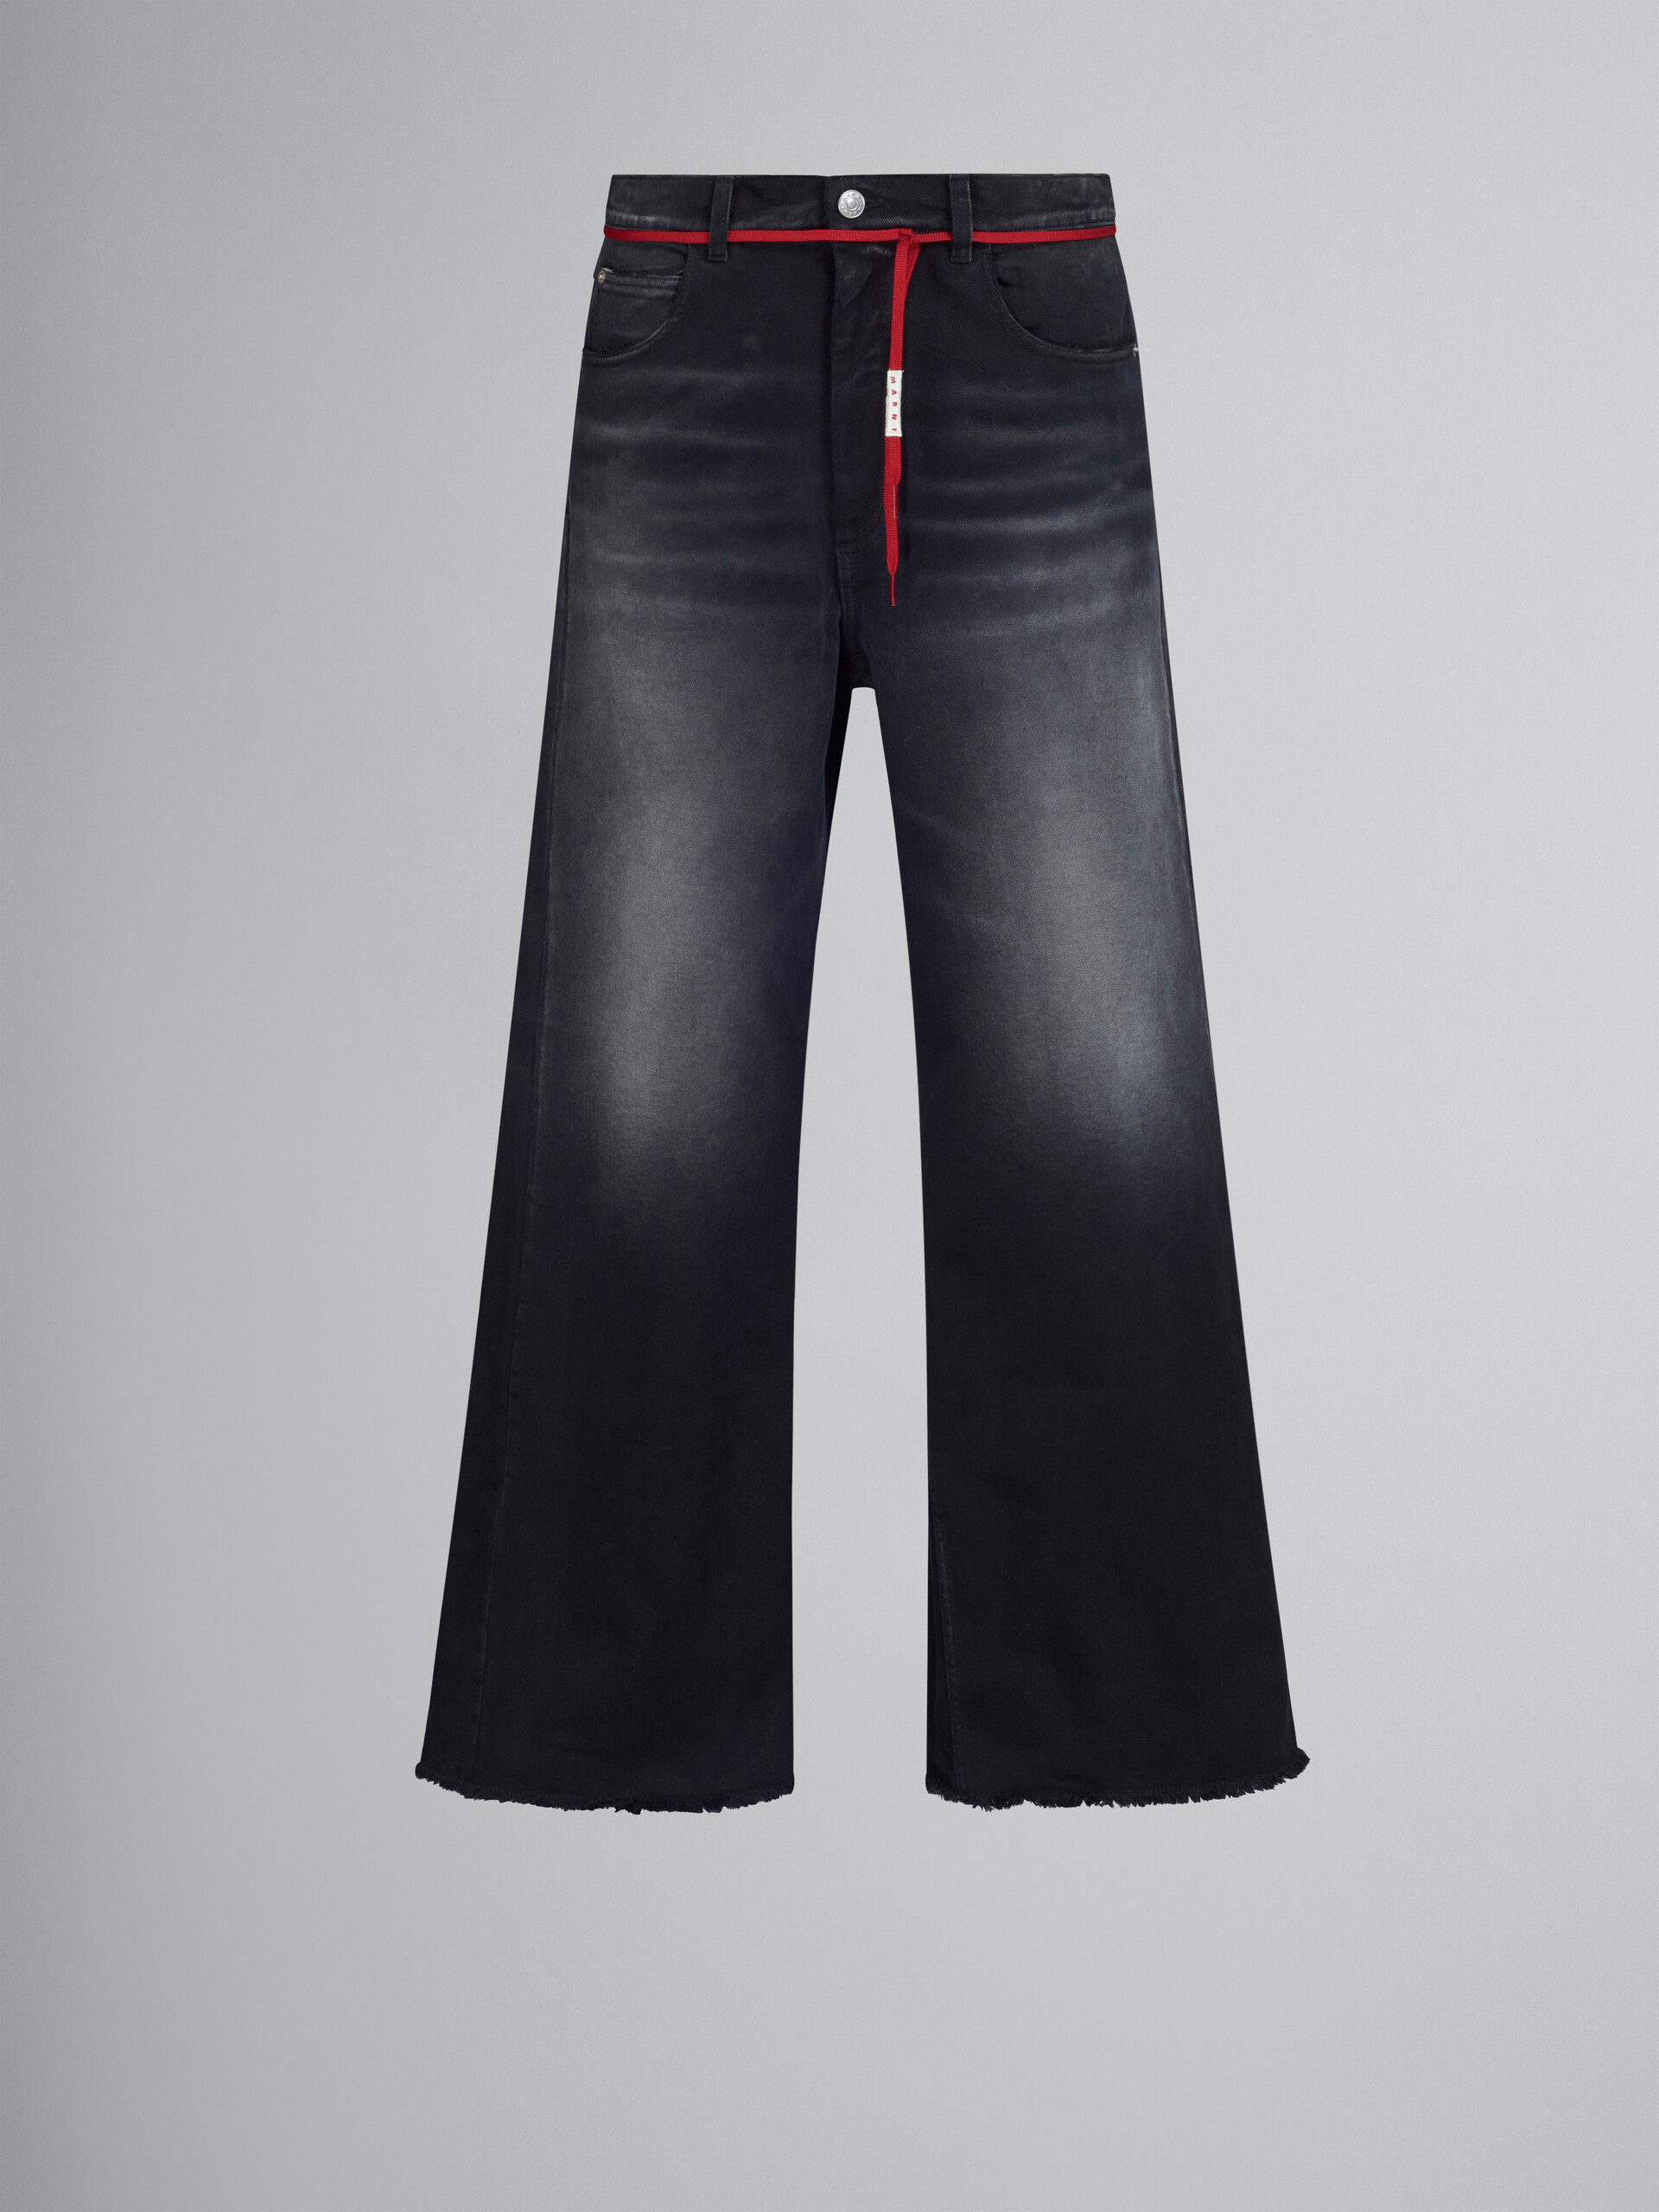 Black bleached bull denim flared trousers - Pants - Image 1